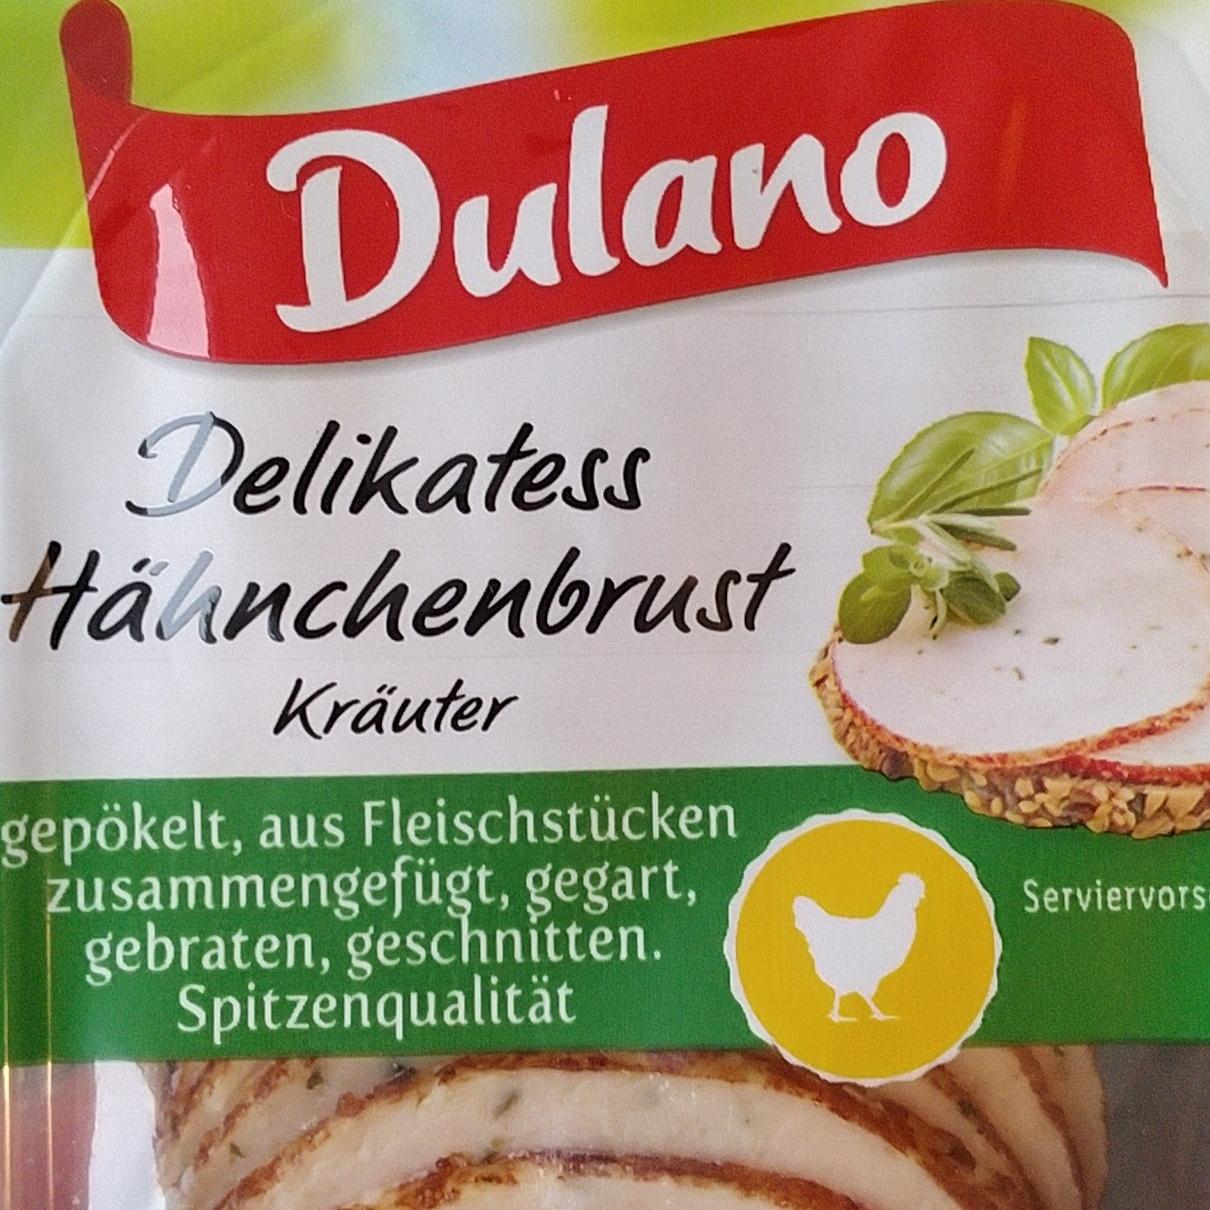 Képek - Delikates Hähnchenbrust Kräuter Dulano